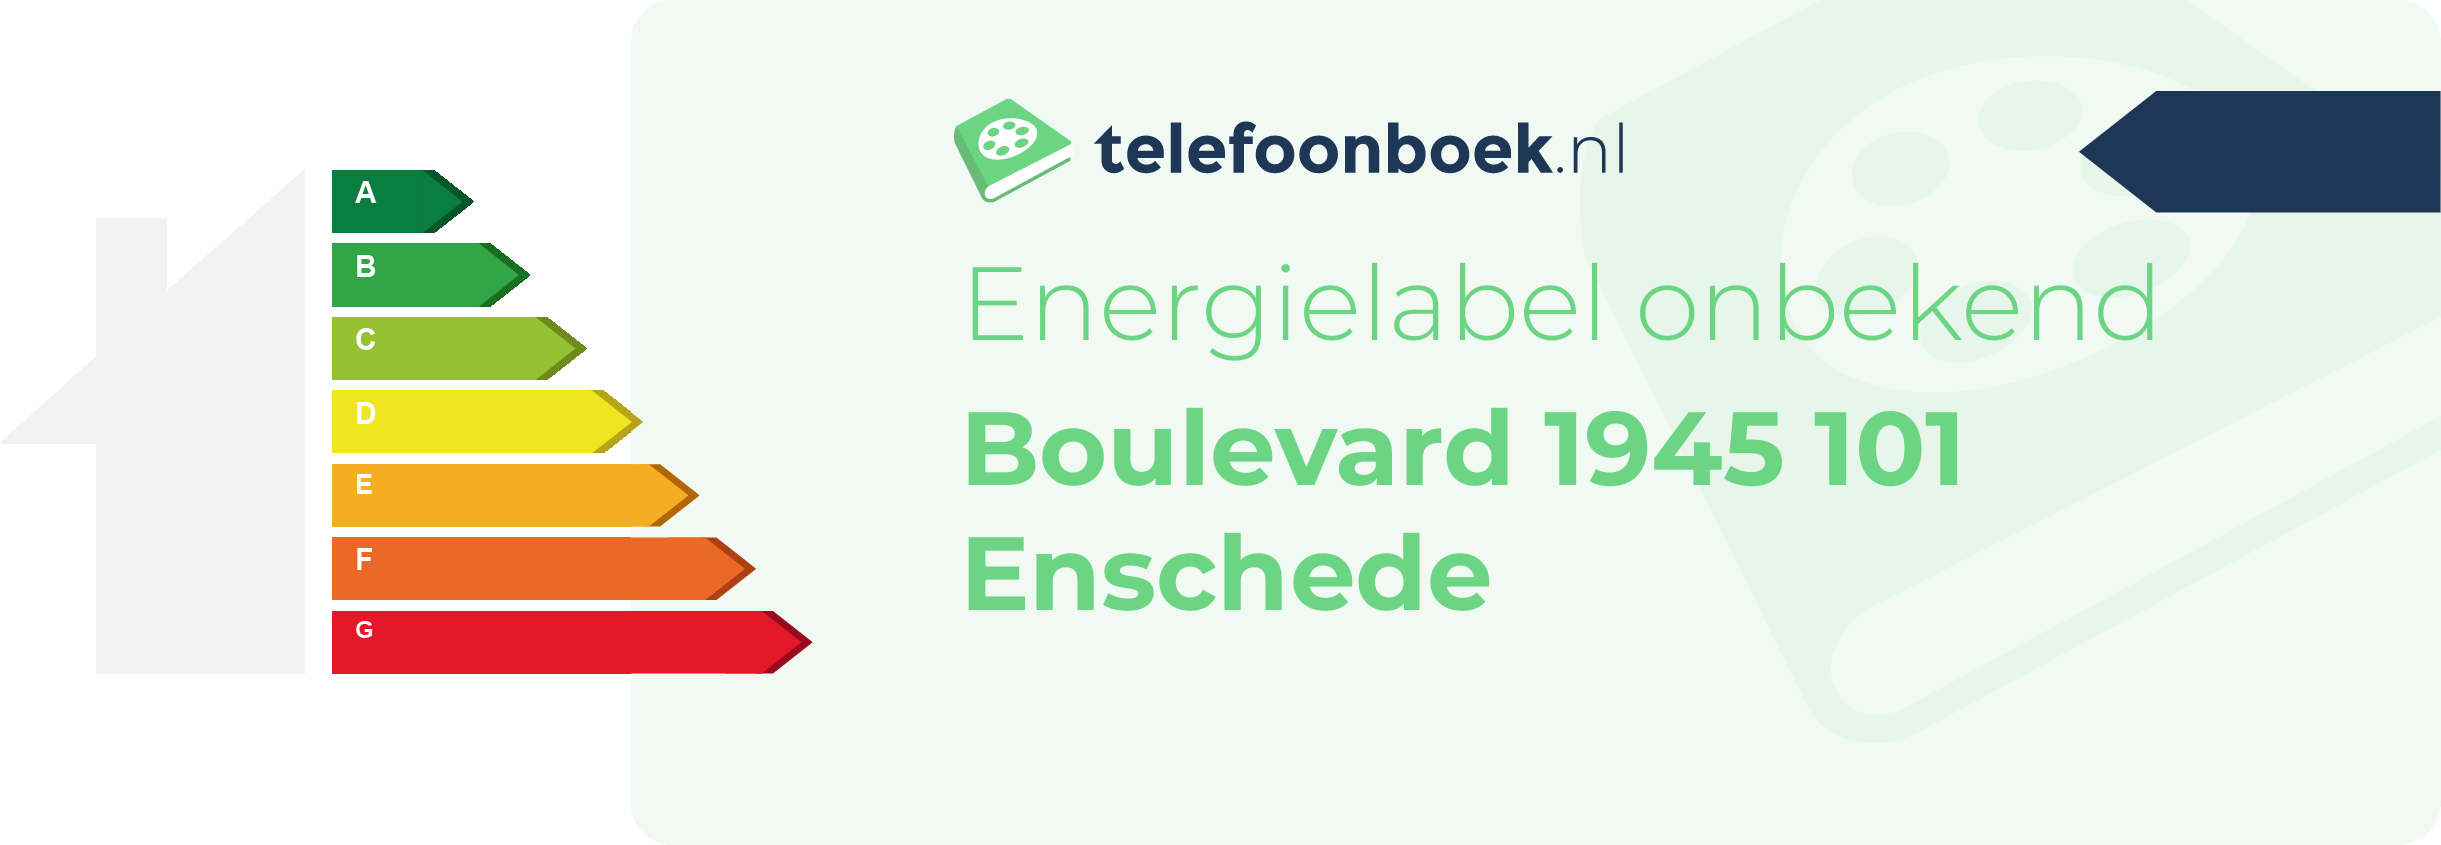 Energielabel Boulevard 1945 101 Enschede